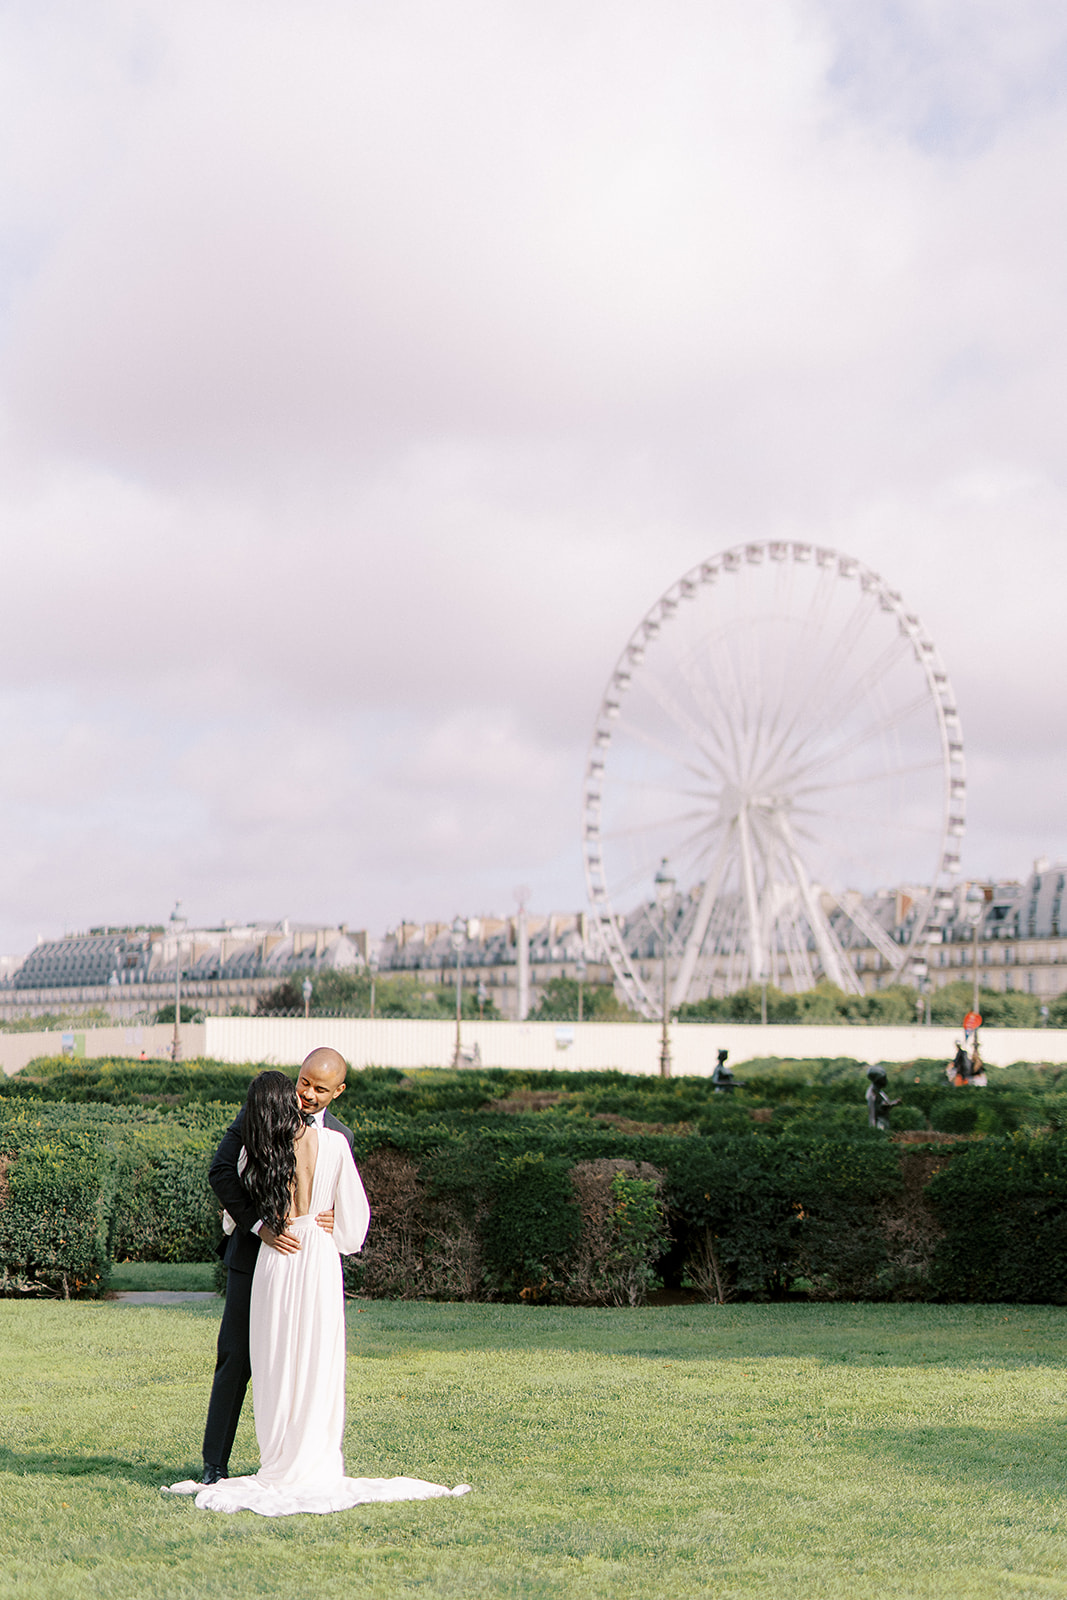 The best Engagement session in Paris | Chernogorov Photography Destination Wedding Photographers